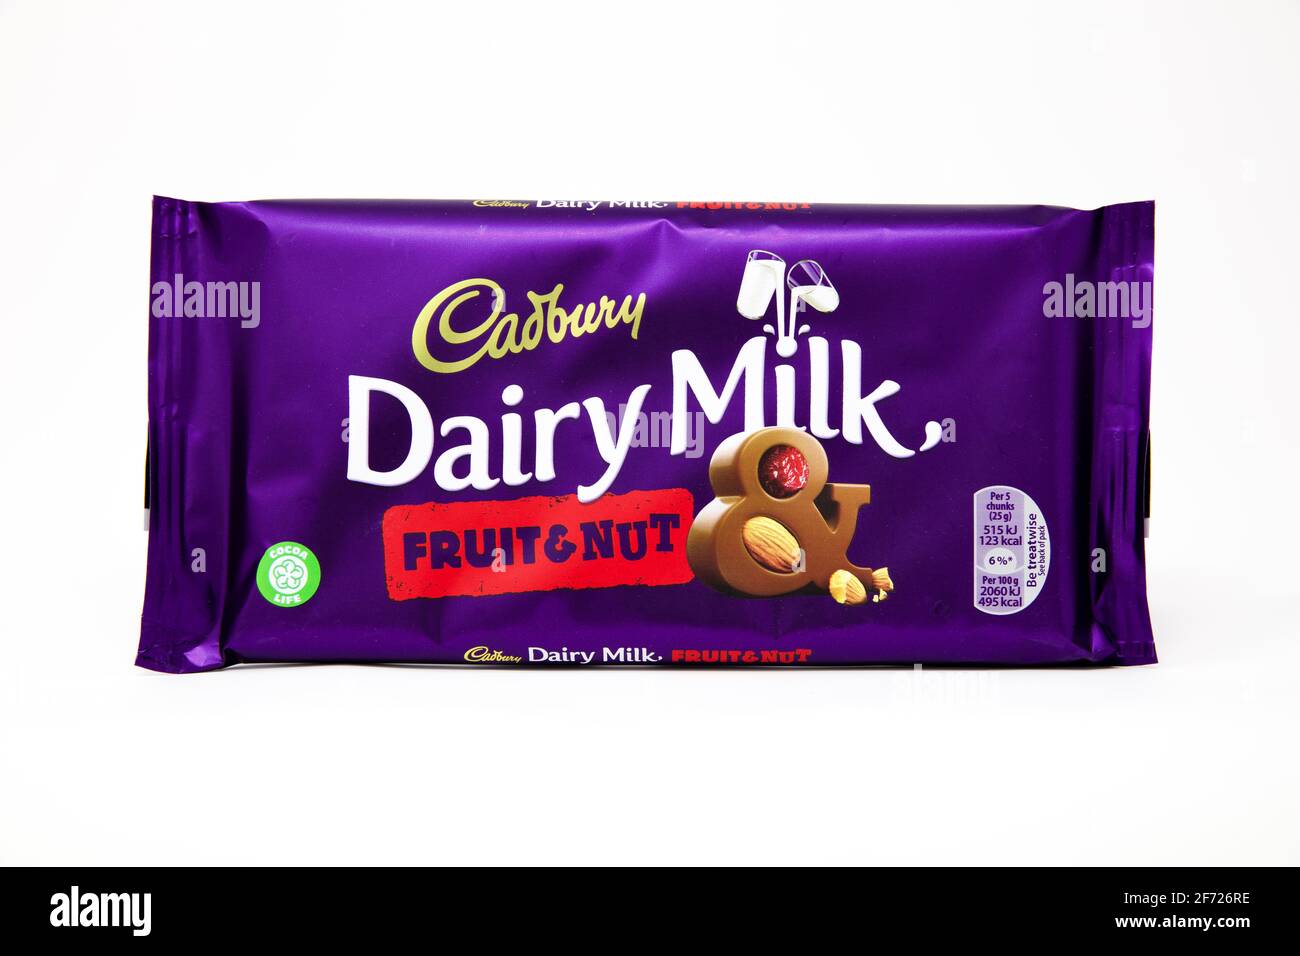 Cadbury Dairy Milk Fruit and Nut Chocolate Bar Stock Photo